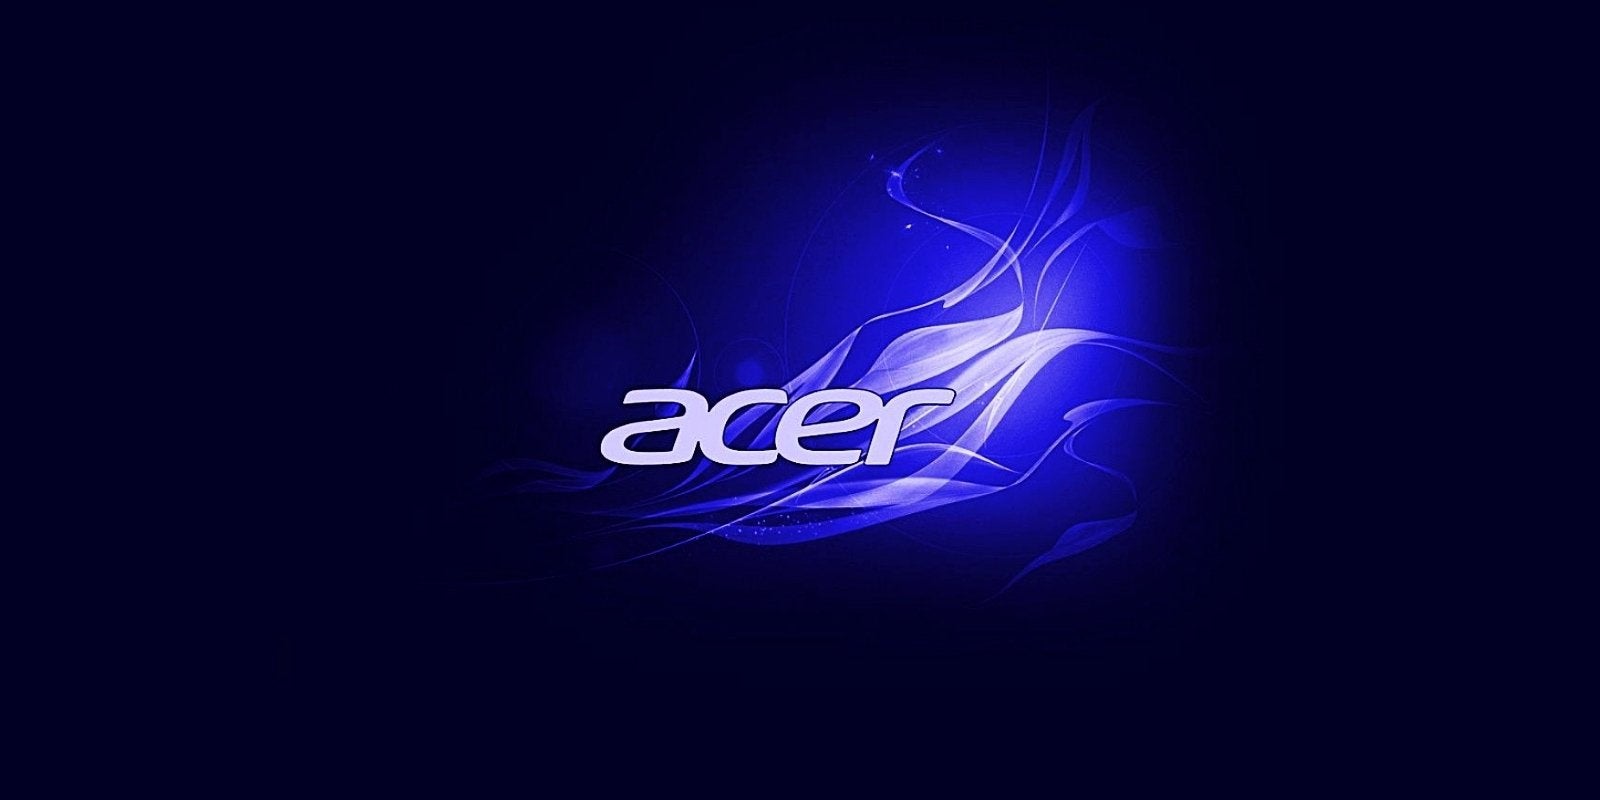 Hackers demand 50 million from Acer in Monero: Monero